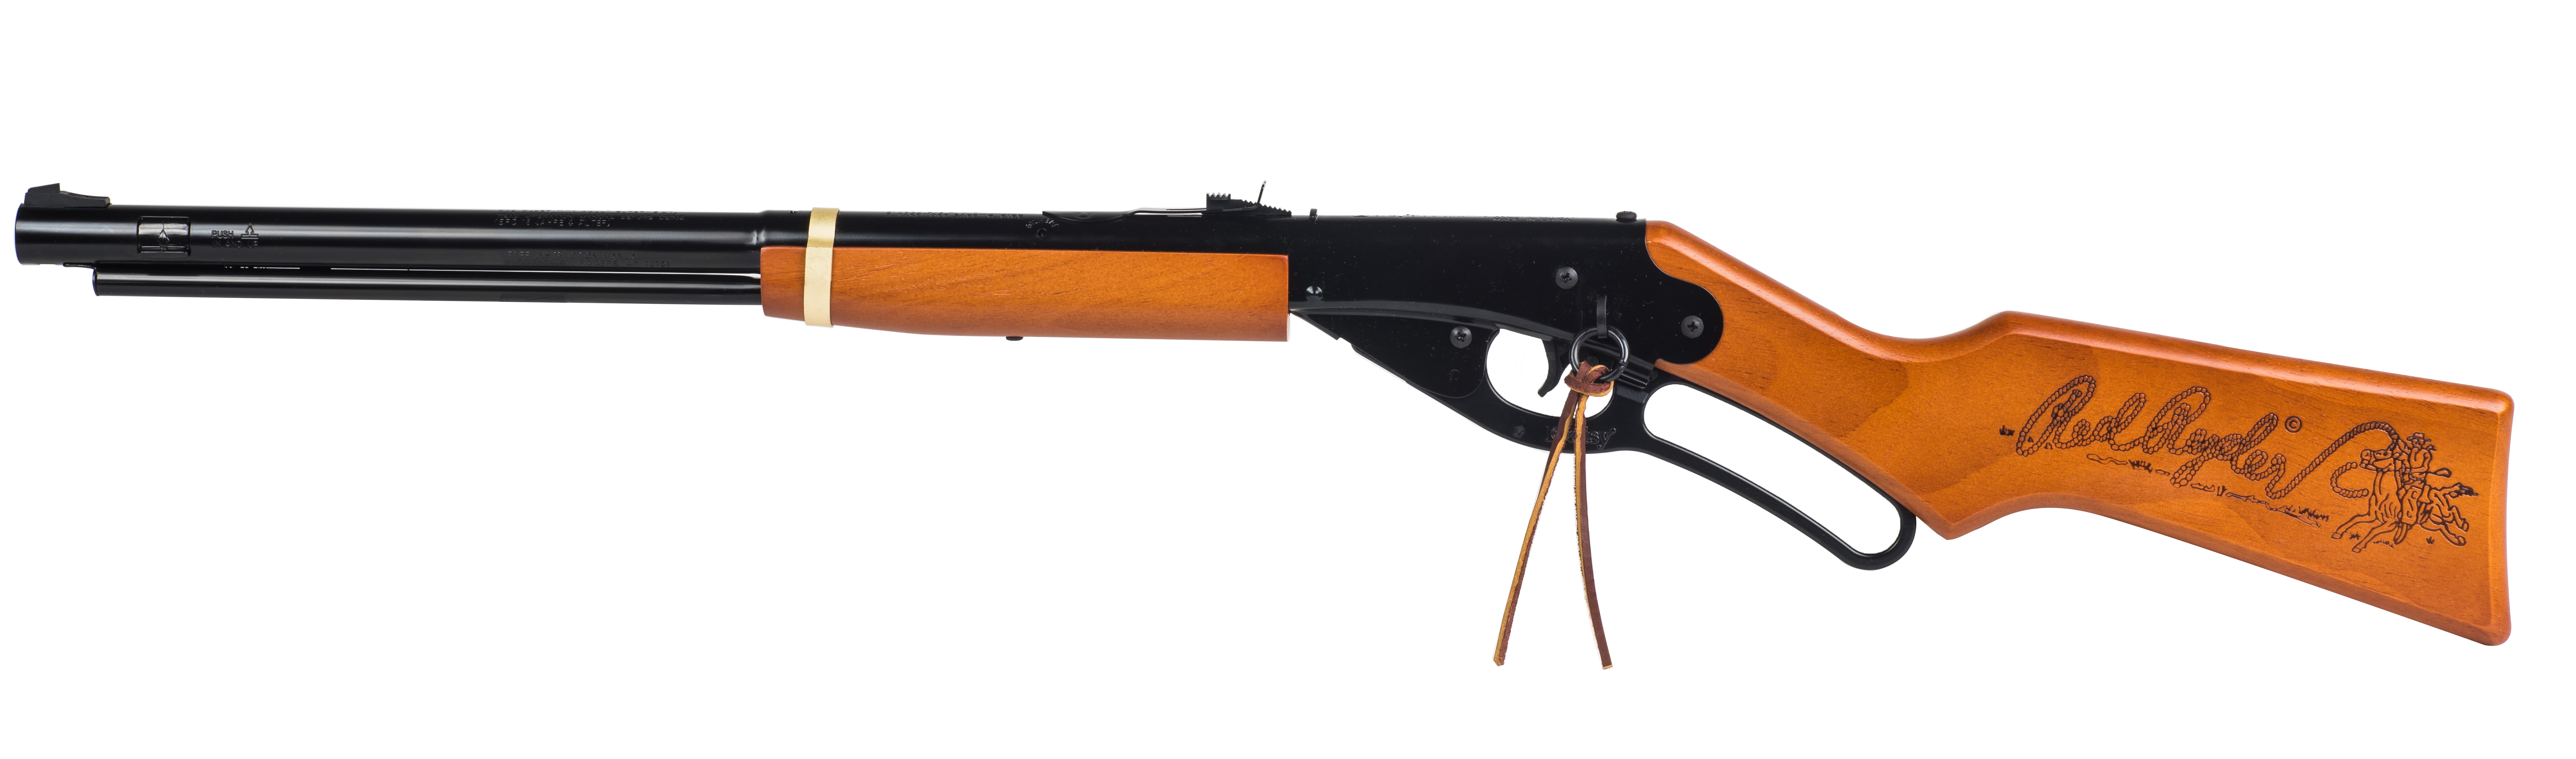 Daisy Christmas Wish Red Ryder BB Gun .177 Cal. Lever Spring Power Rifle - Walmart.com